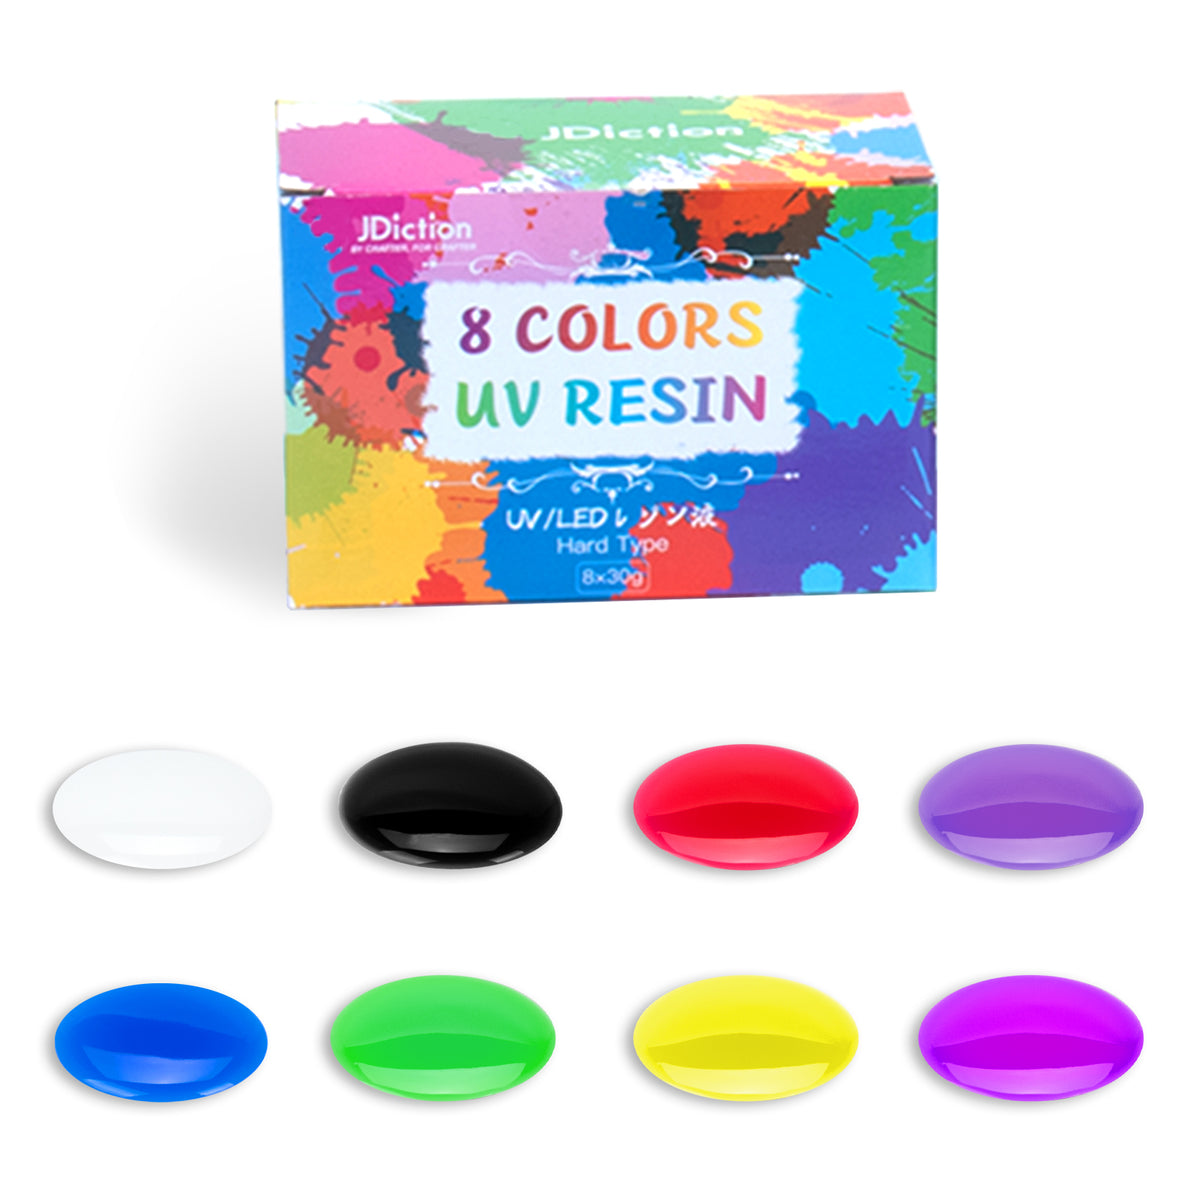  Colored UV Resin,8 Colors UV Resin Kit,Quick